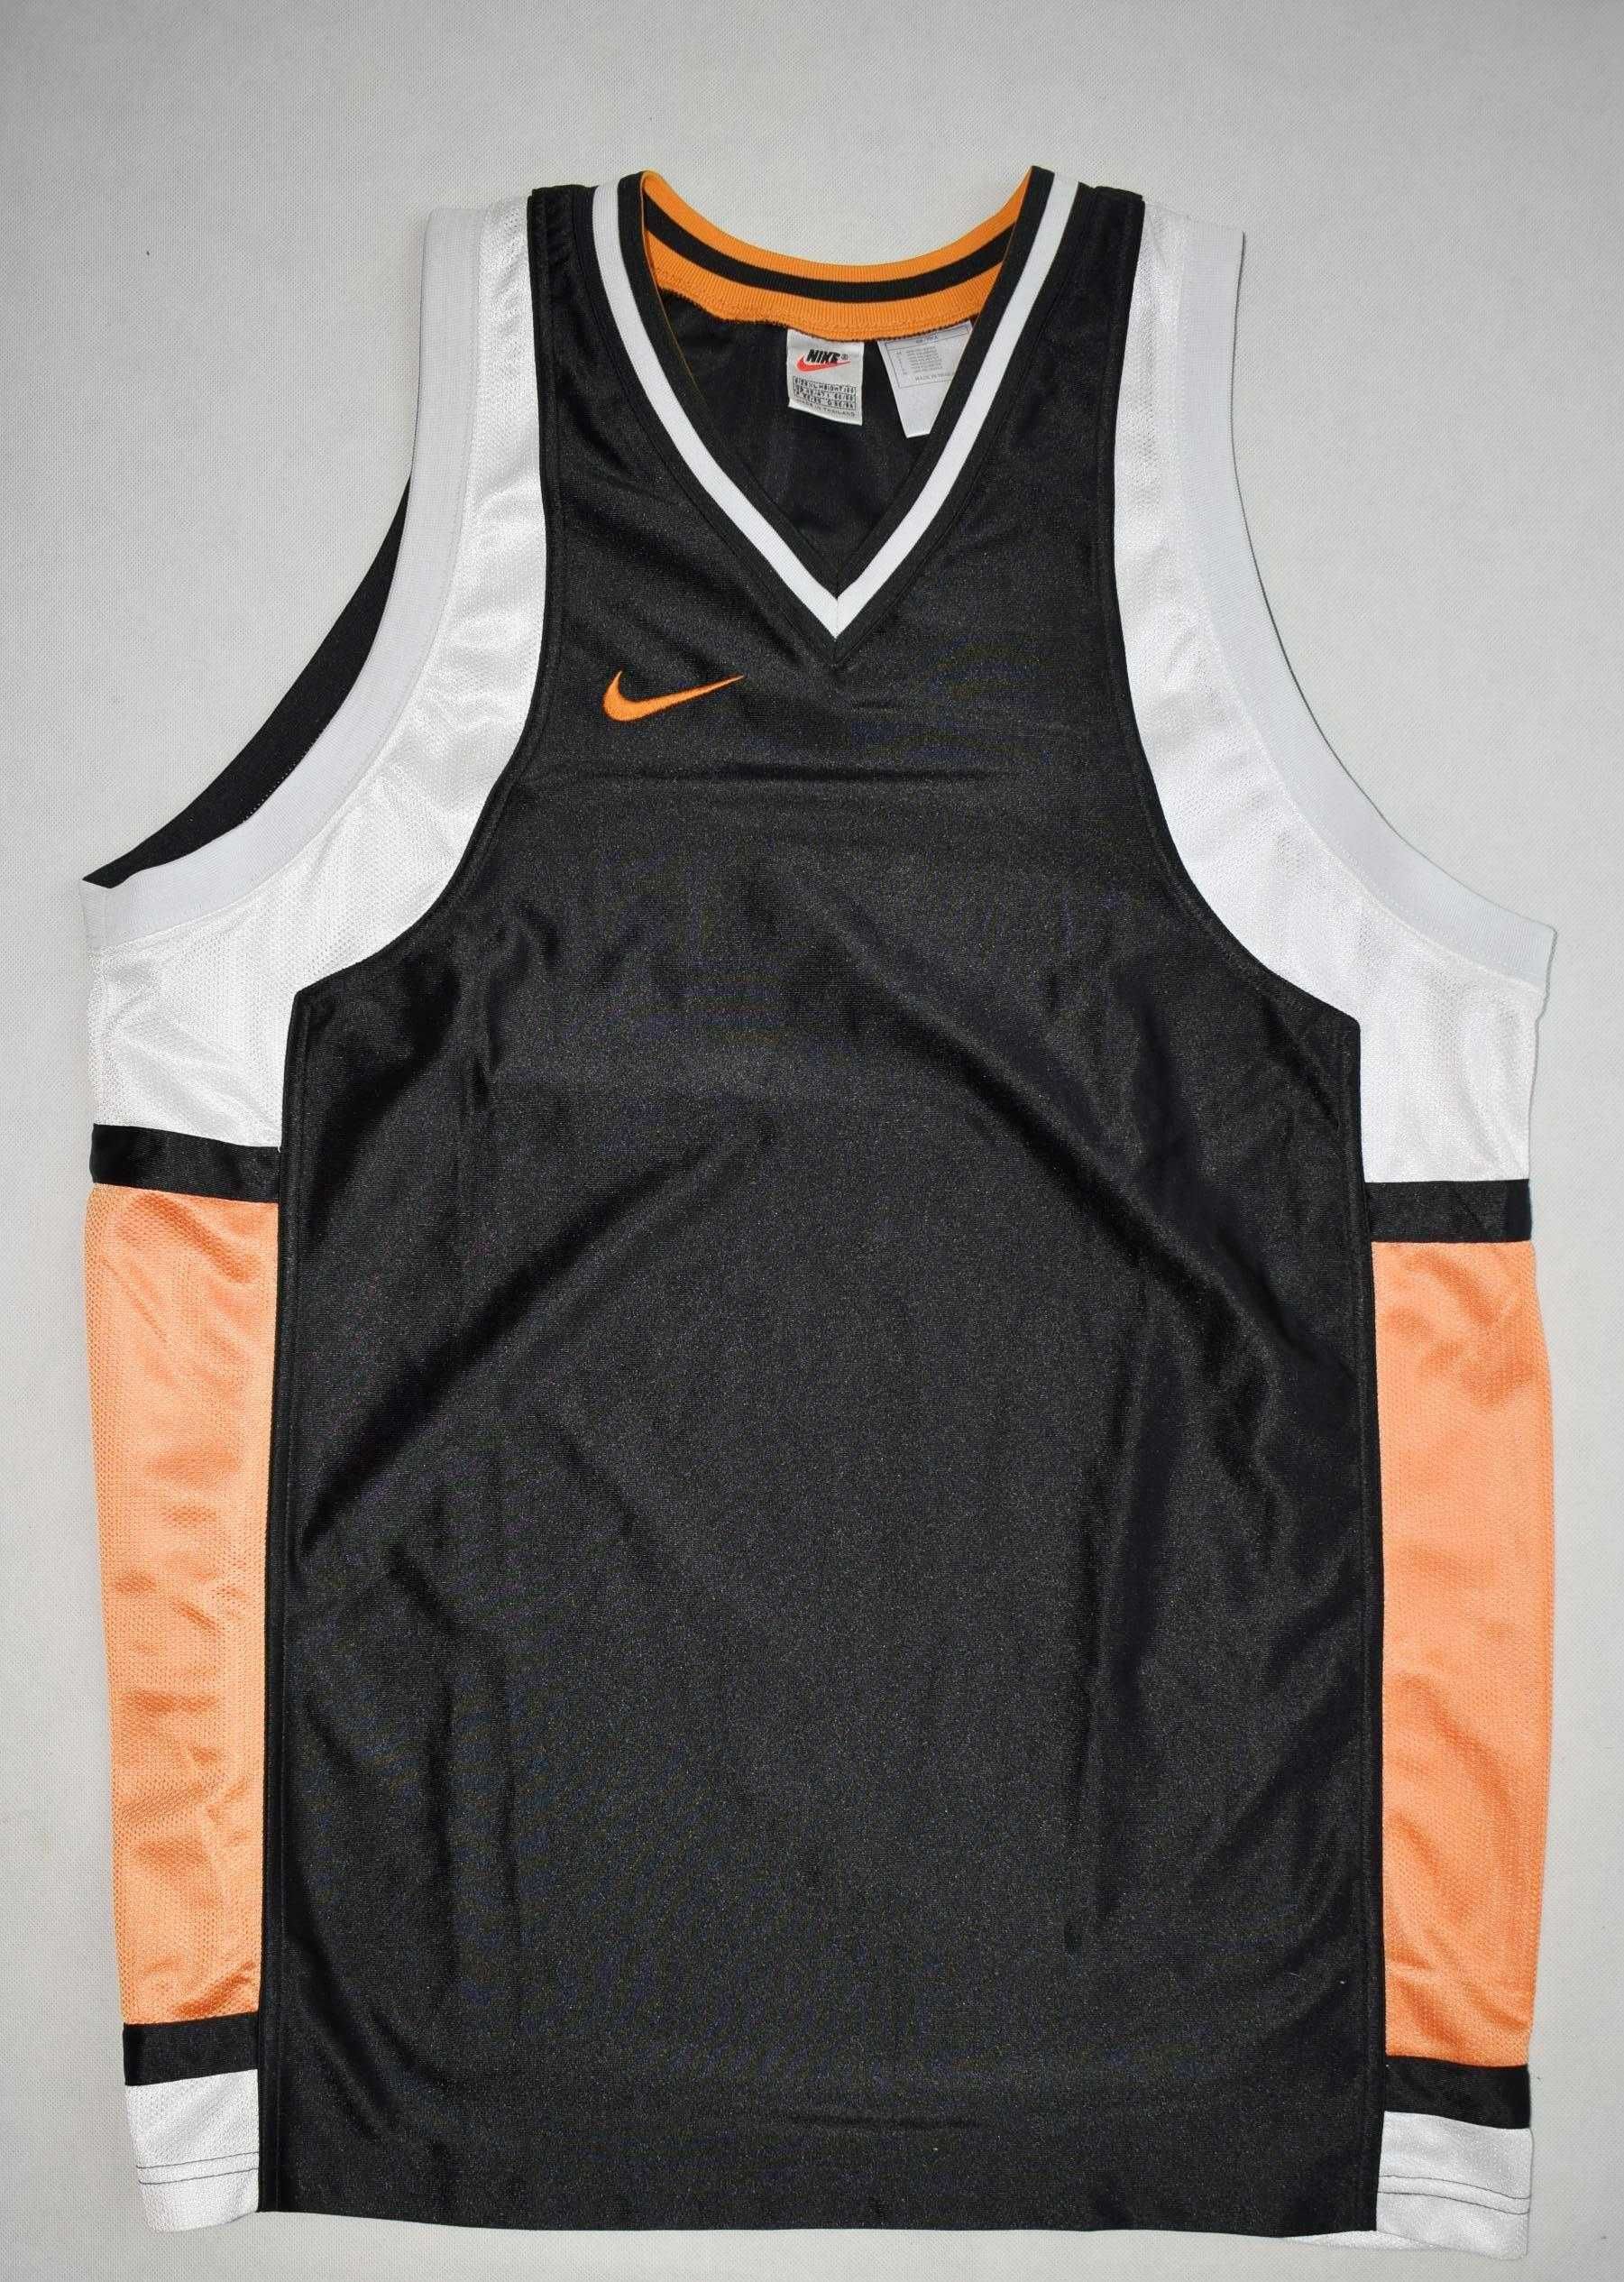 Nike koszulka Vintage NBA do koszykówki XL/XXL